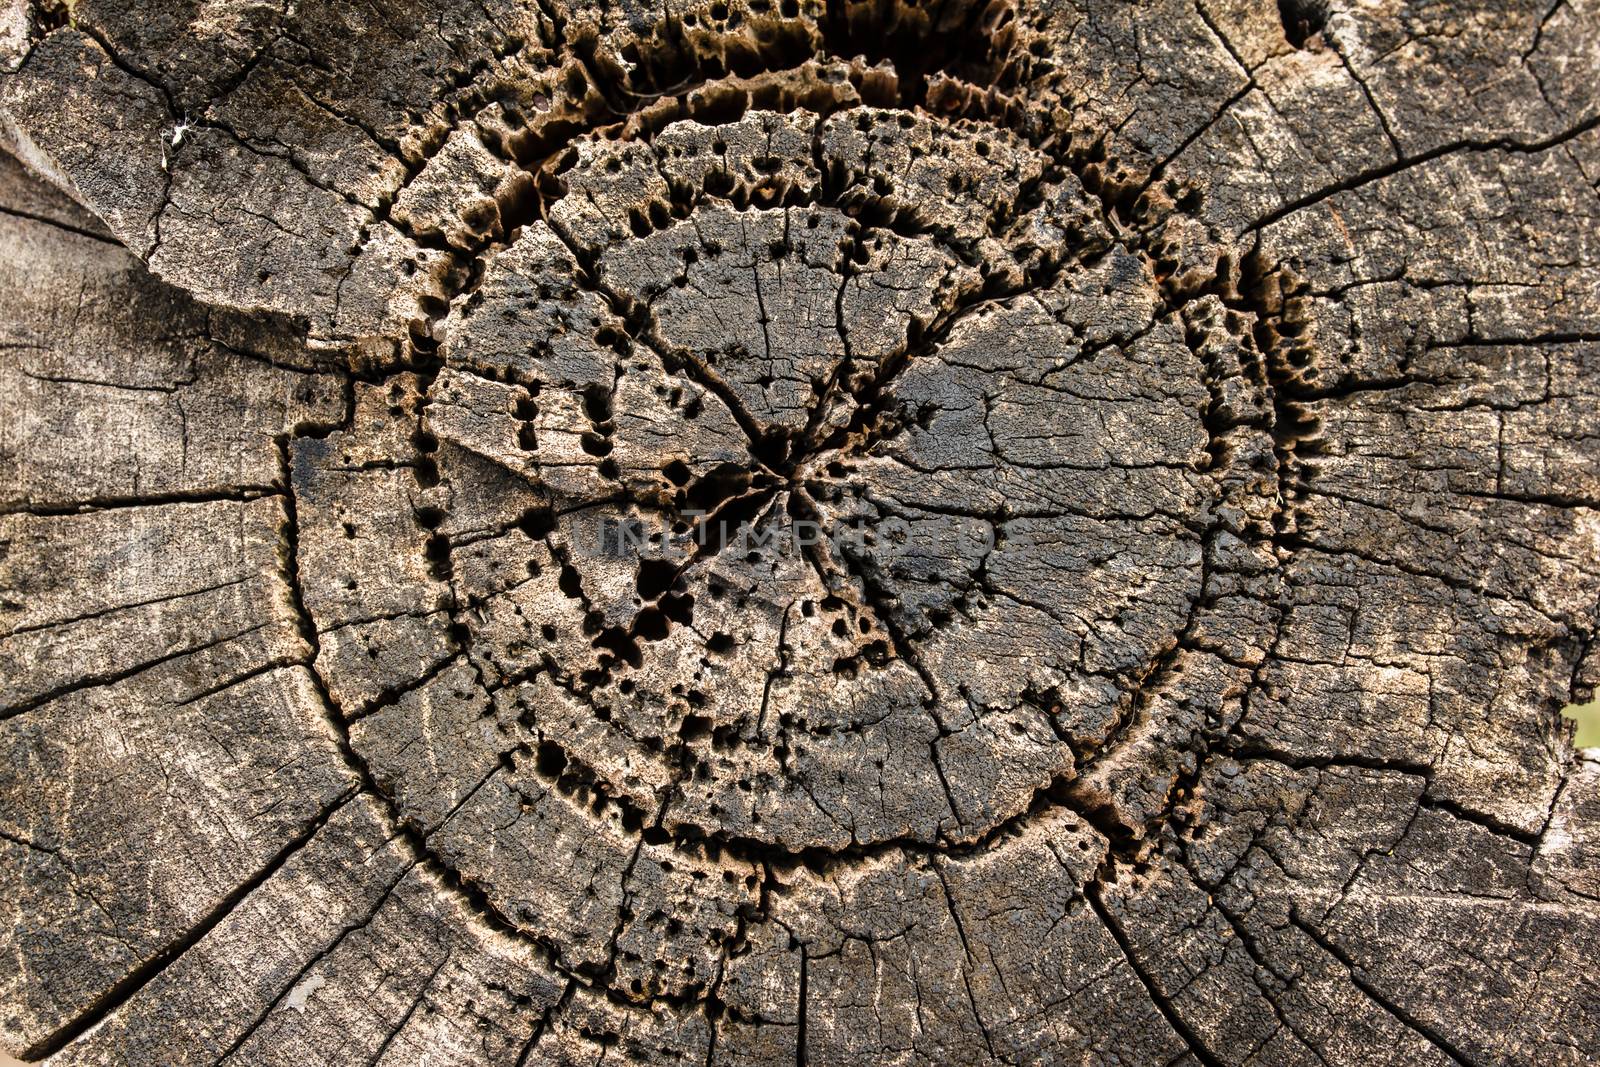 old tree stump texture background